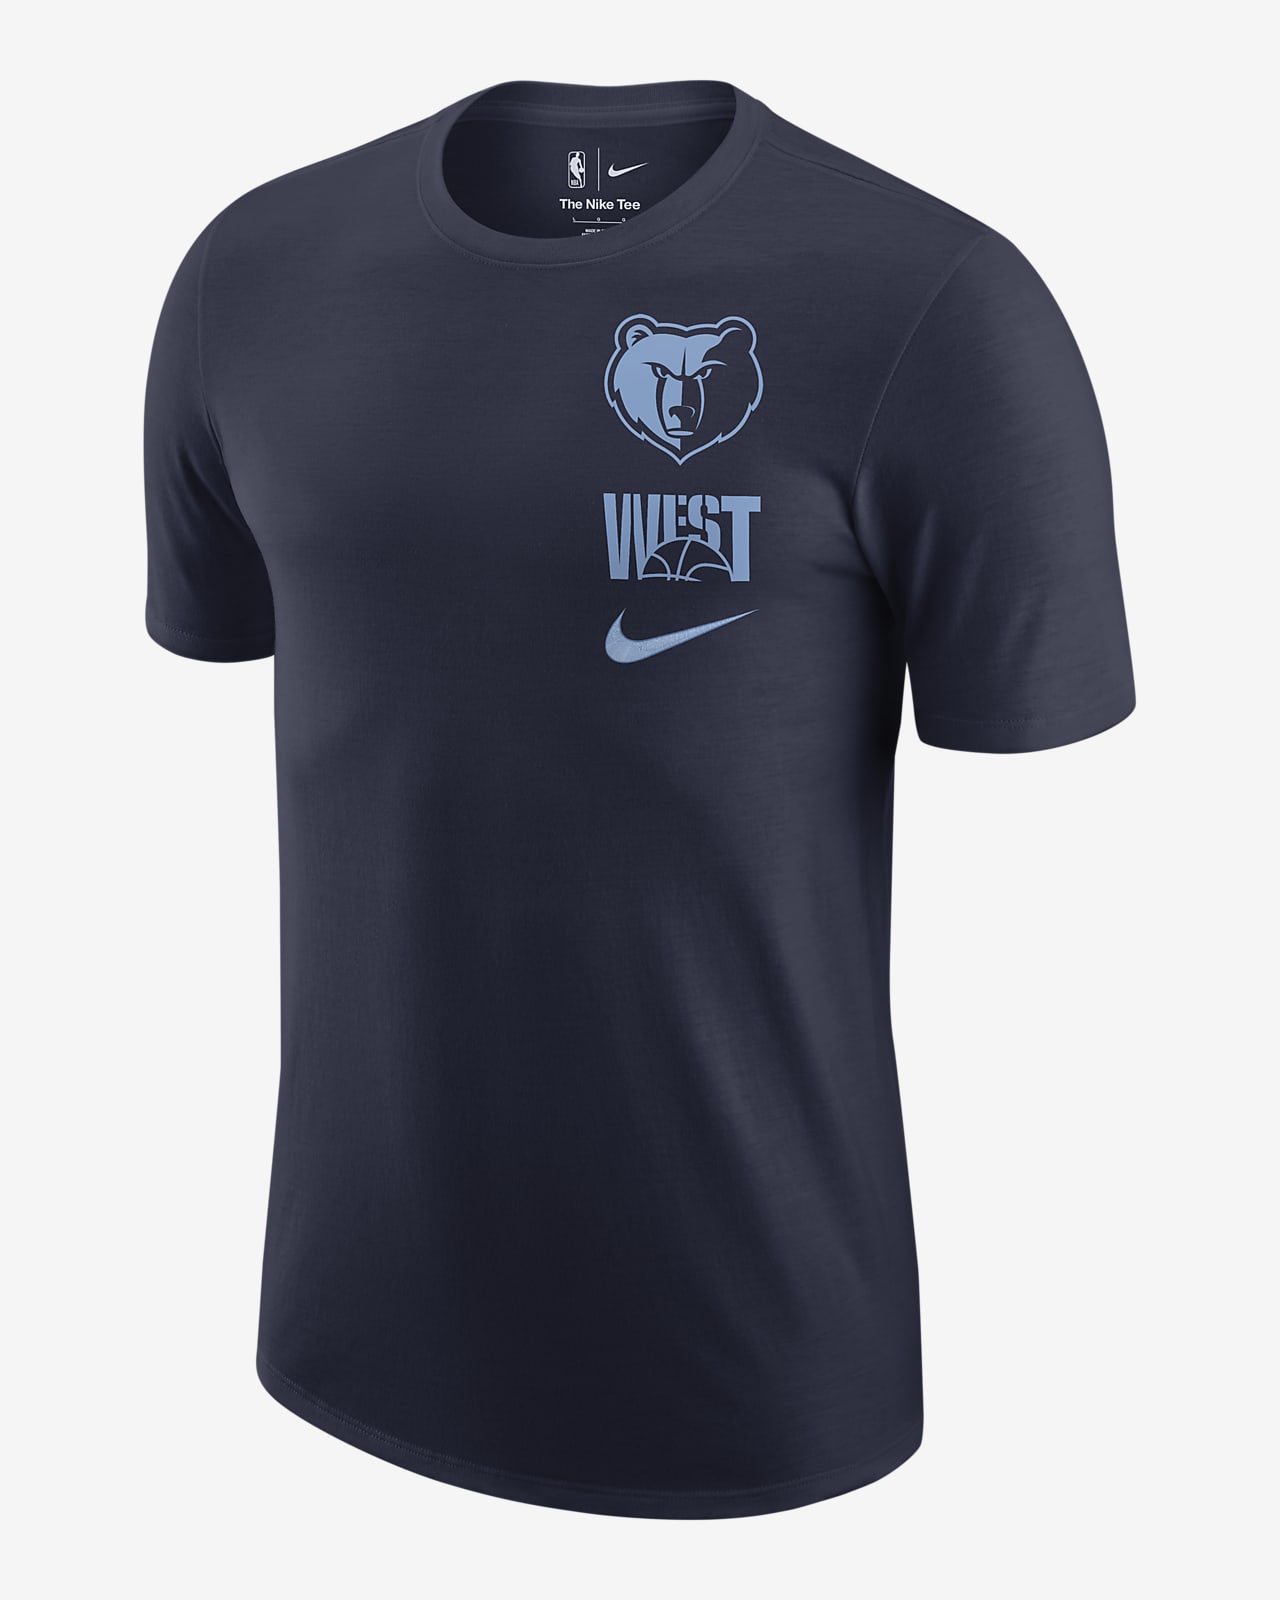 NWT Men's Nike NBA Memphis Grizzlies Team Issued Practice Warm-Up  DriFit T-Shirt